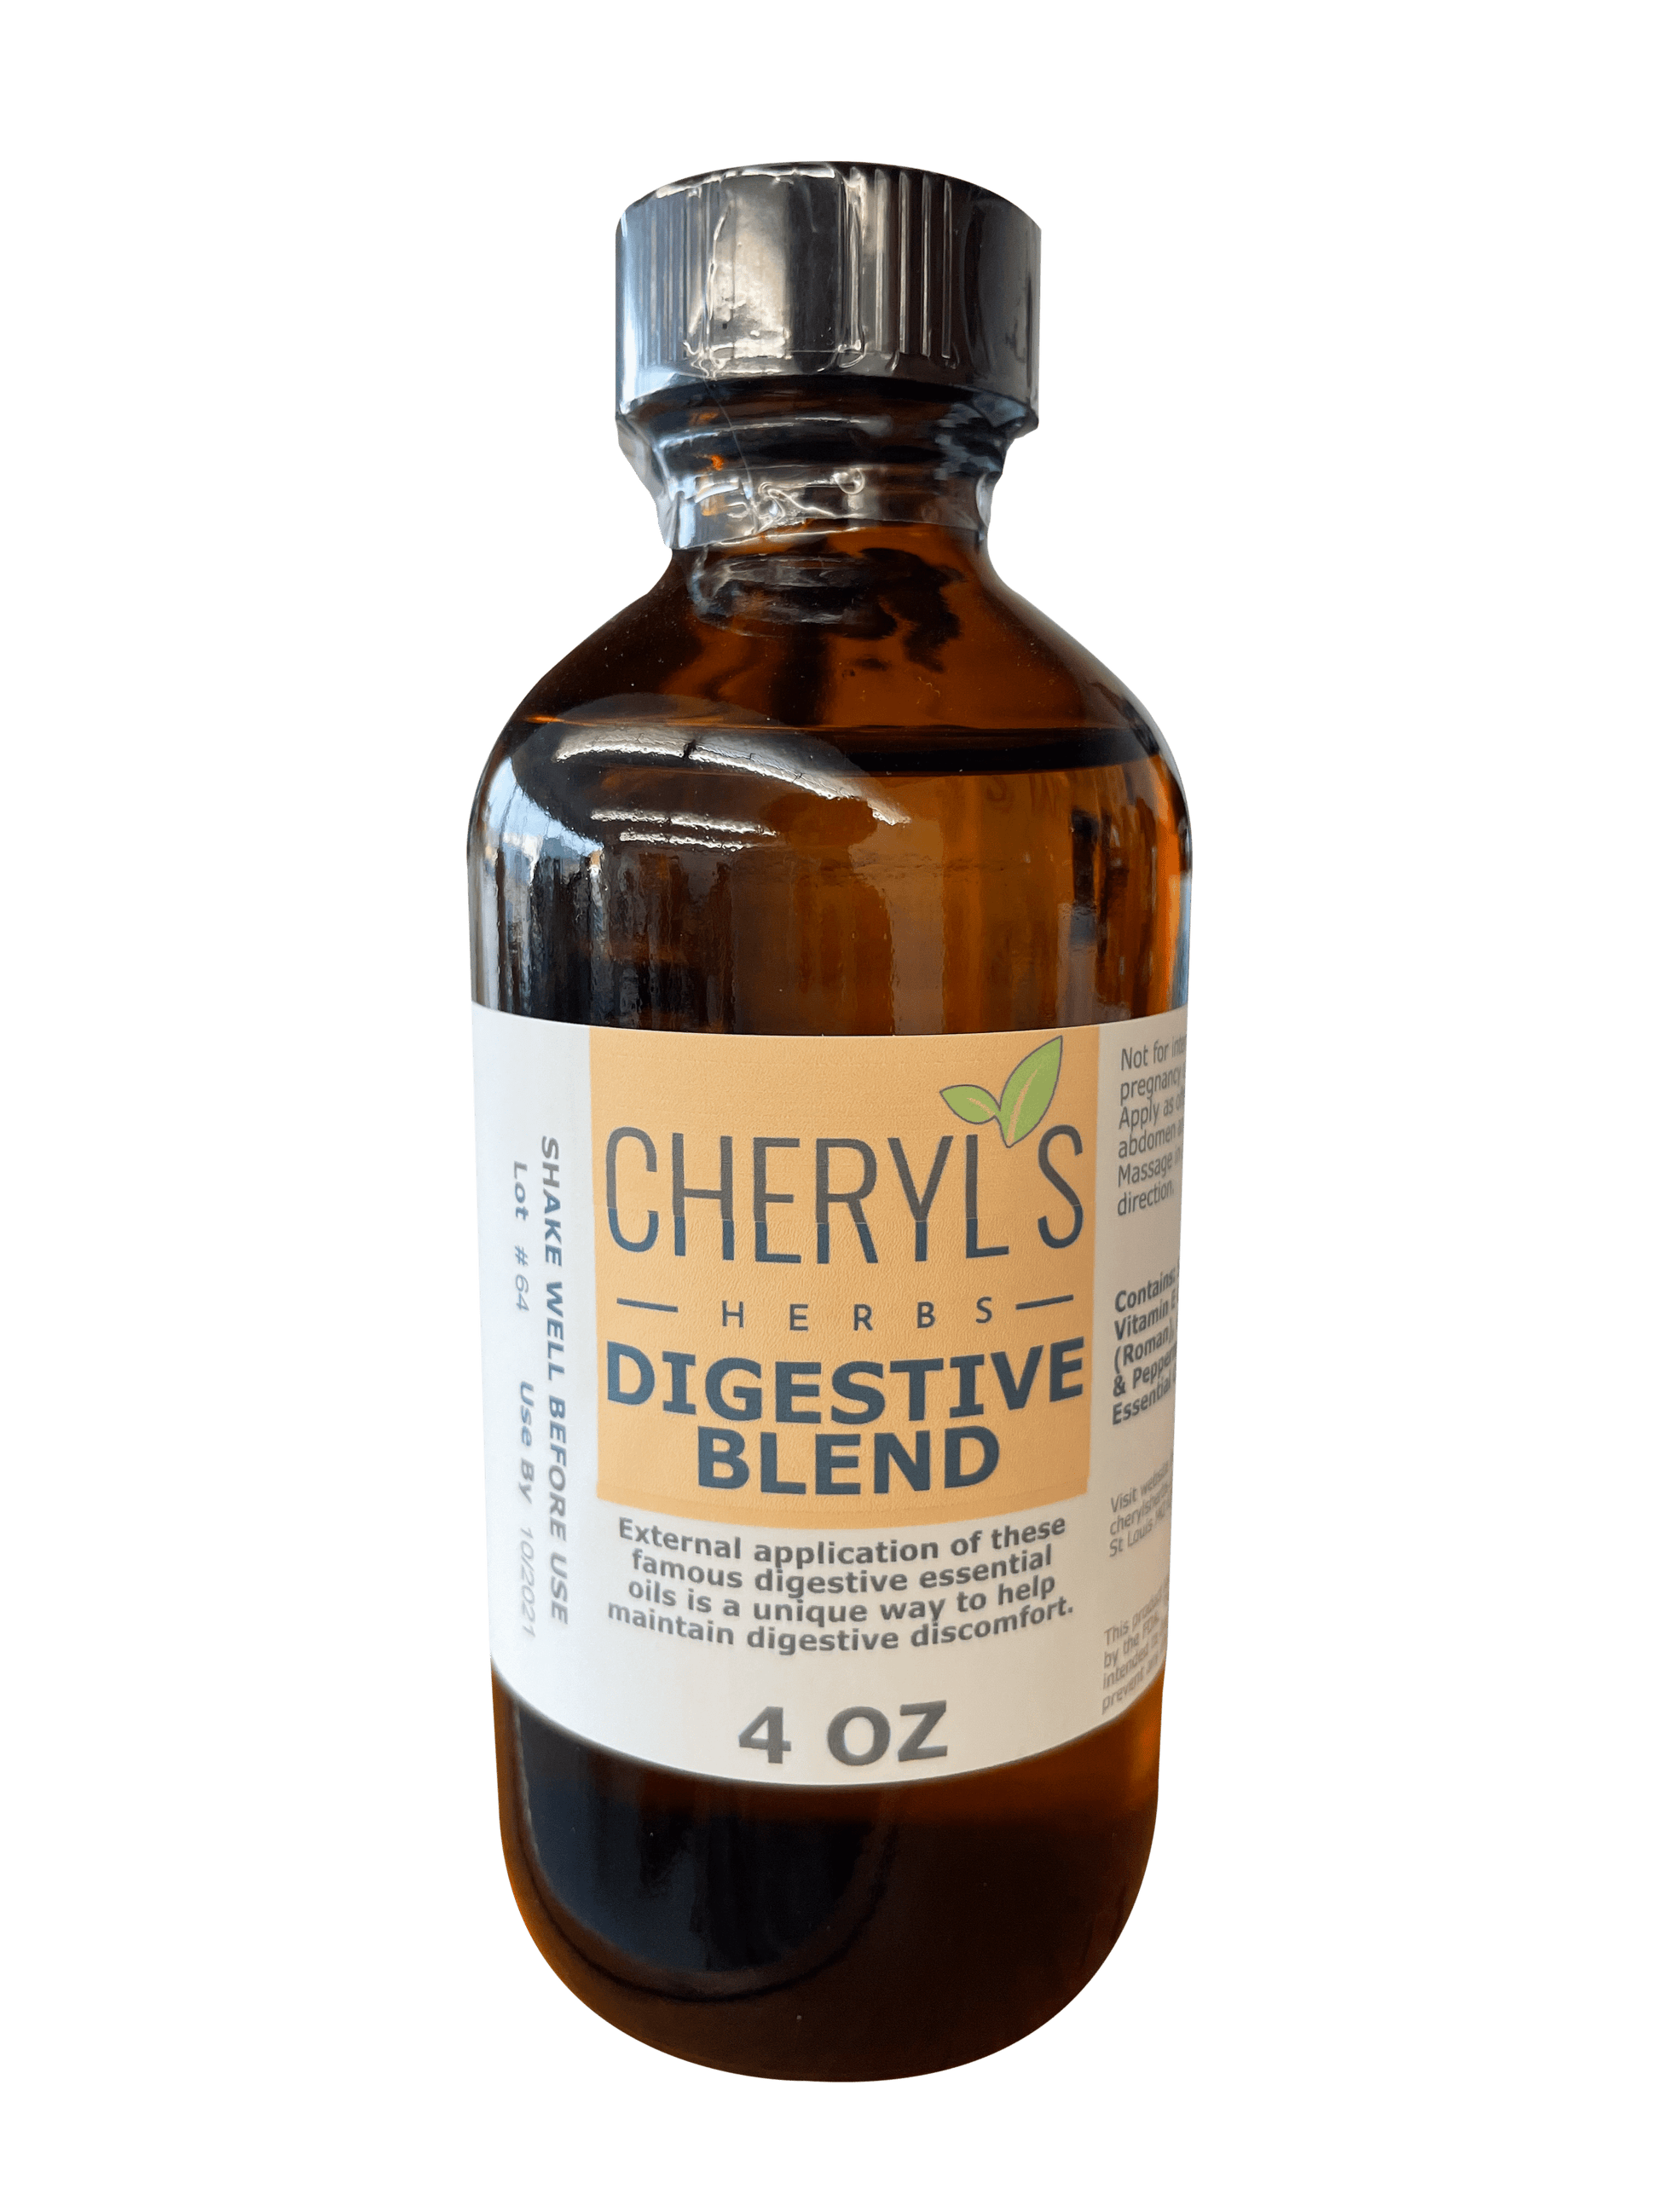 DIGESTIVE BLEND - Cheryls Herbs